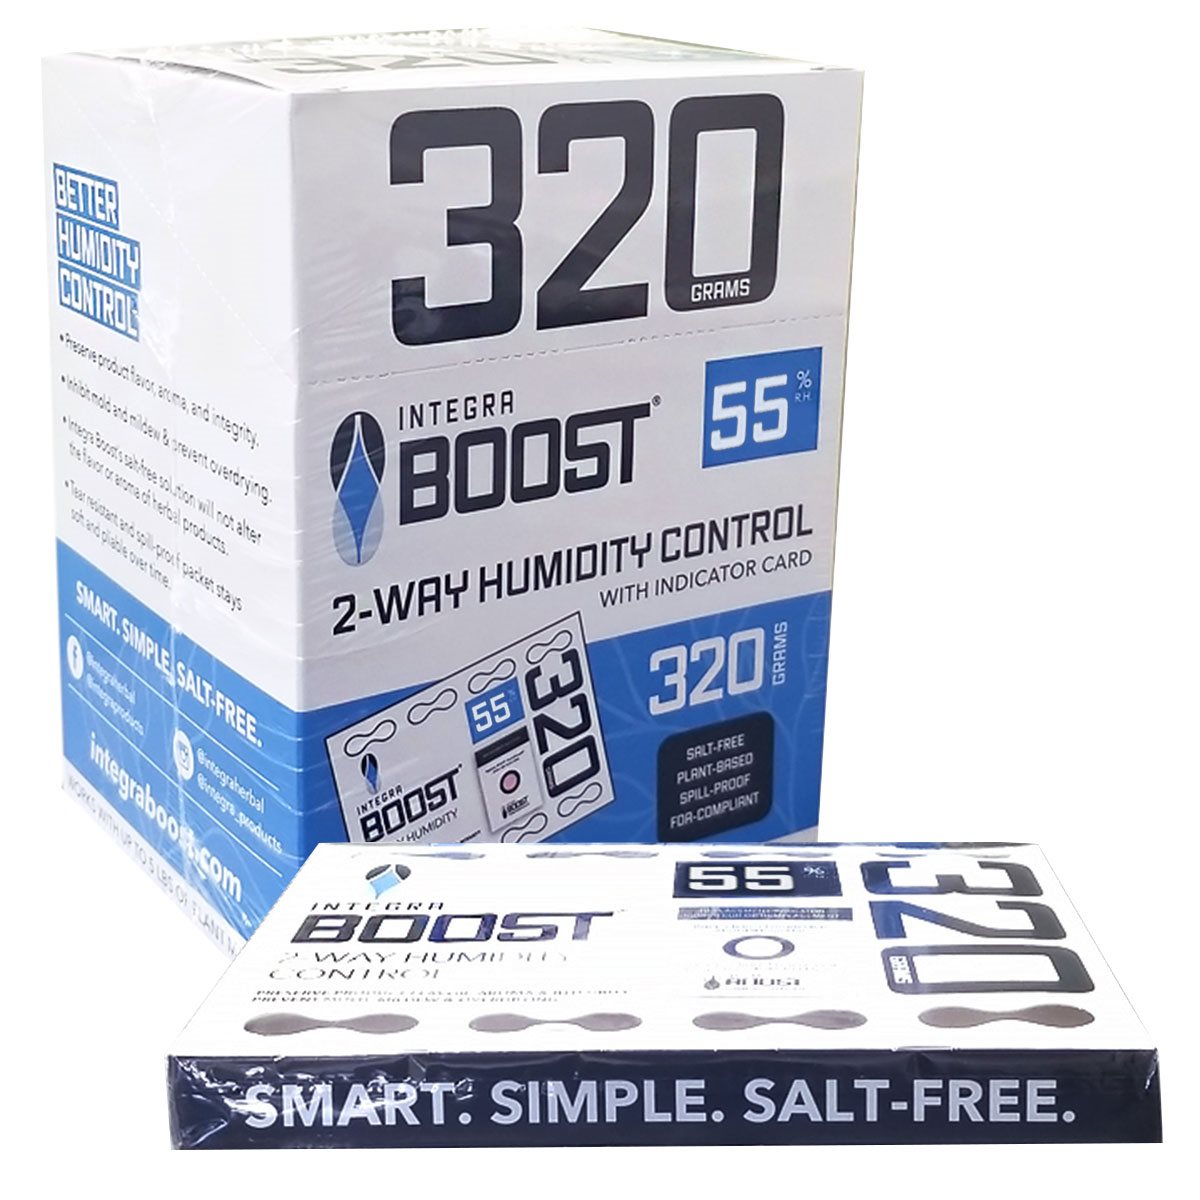 Humidity Pack- 8 Gram Size Integra Boost 2 Way 62% RH (100 Units